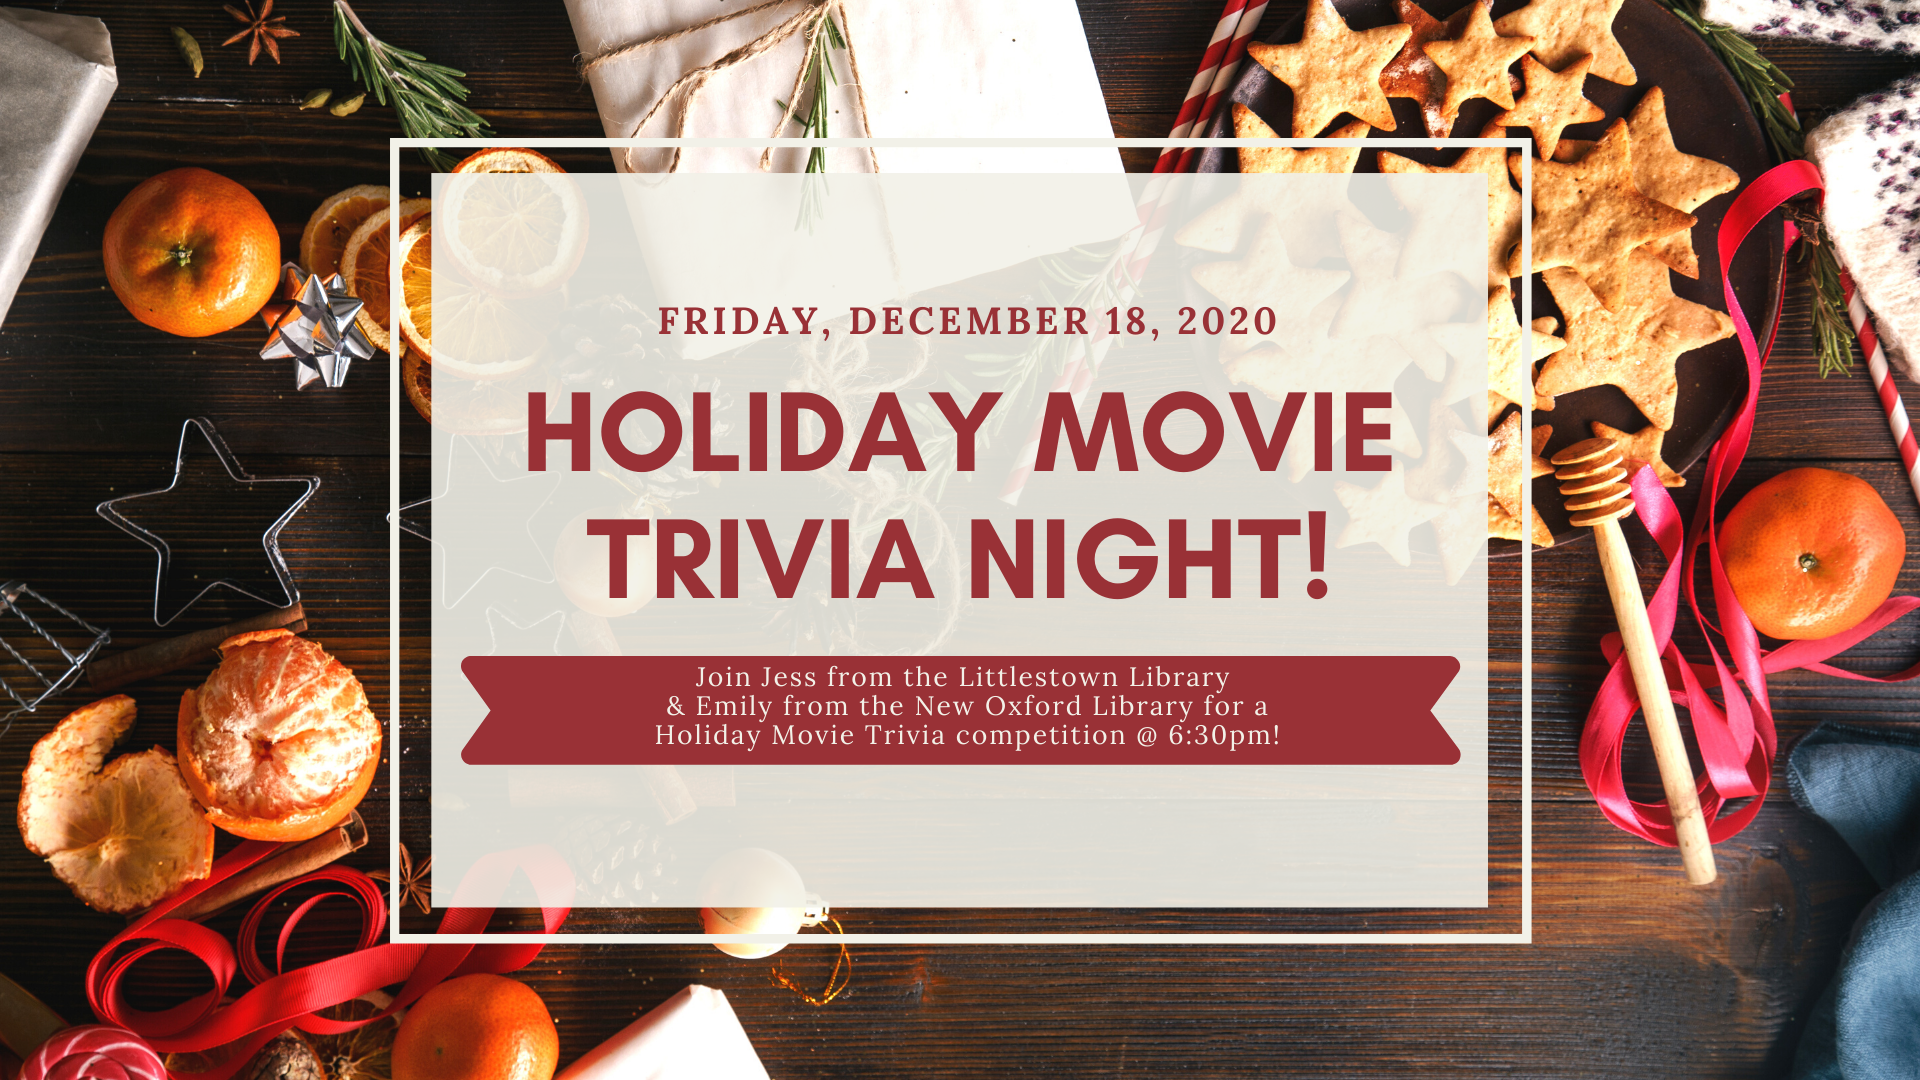 Holiday Movie Trivia Night on Friday, December 18, 2020 at 6:30pm!